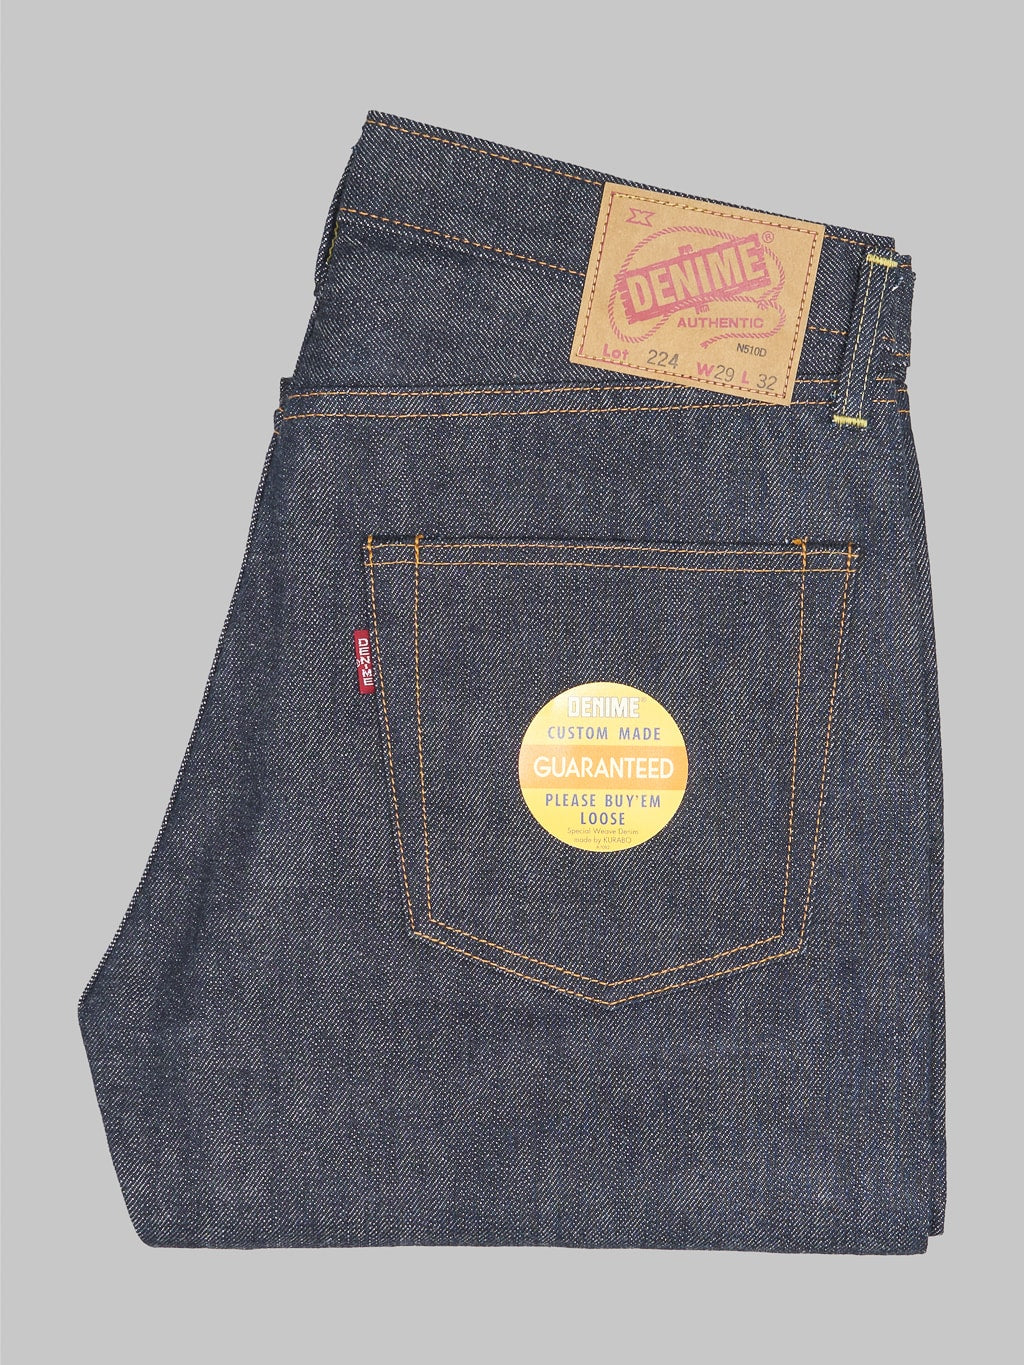 Denime By Warehouse & Co. "Lot. 224" 66Model 14.5oz Regular Straight Jeans